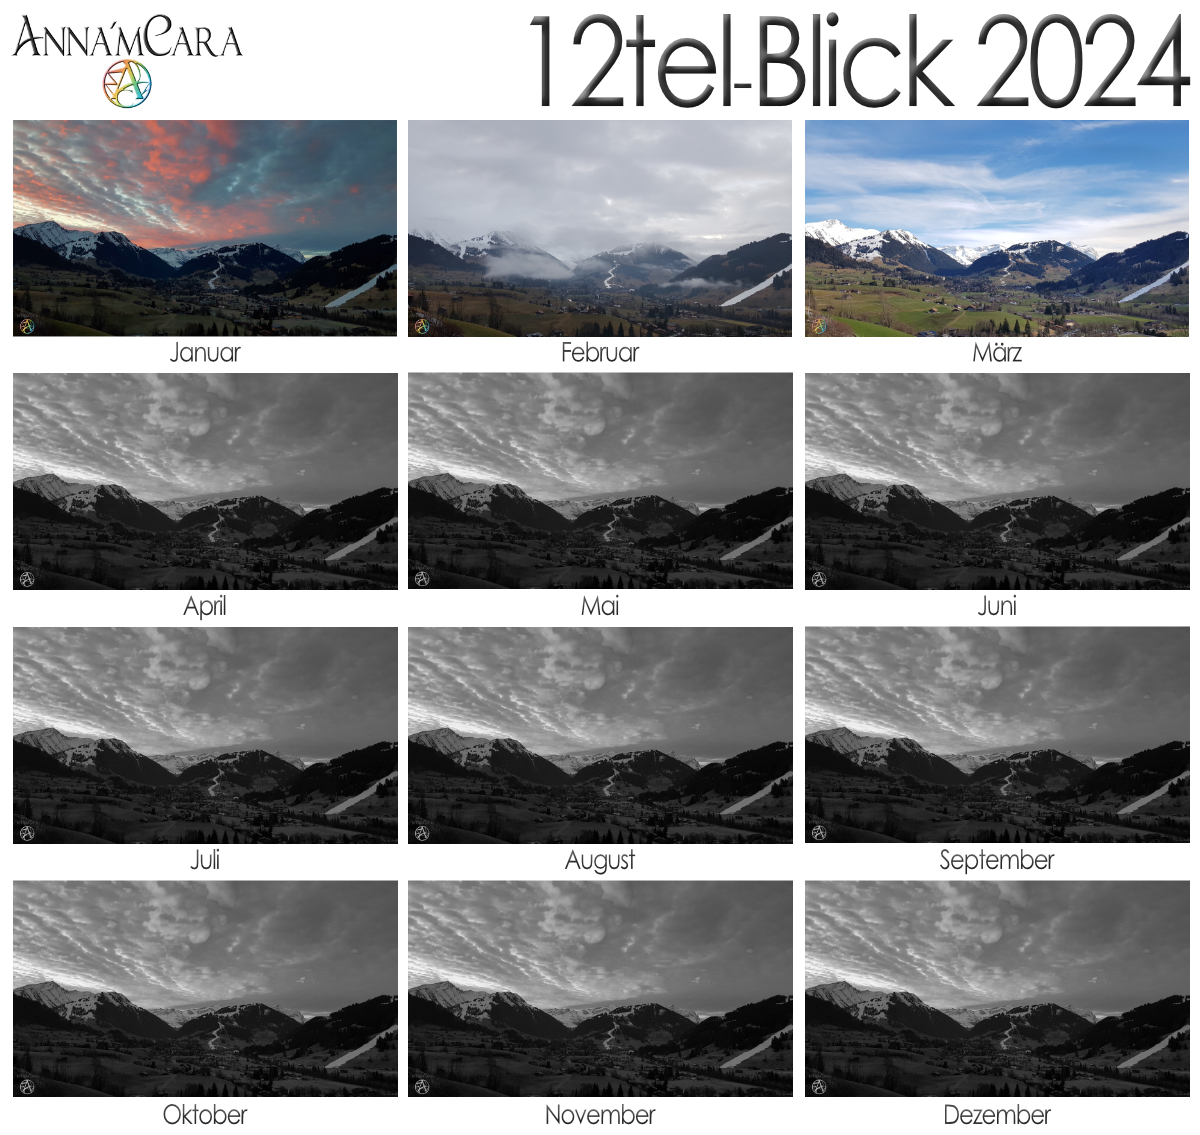 Anna'mCara-Blog - 12tel-Blick - Jahresüberblick - Gstaad - März 2024